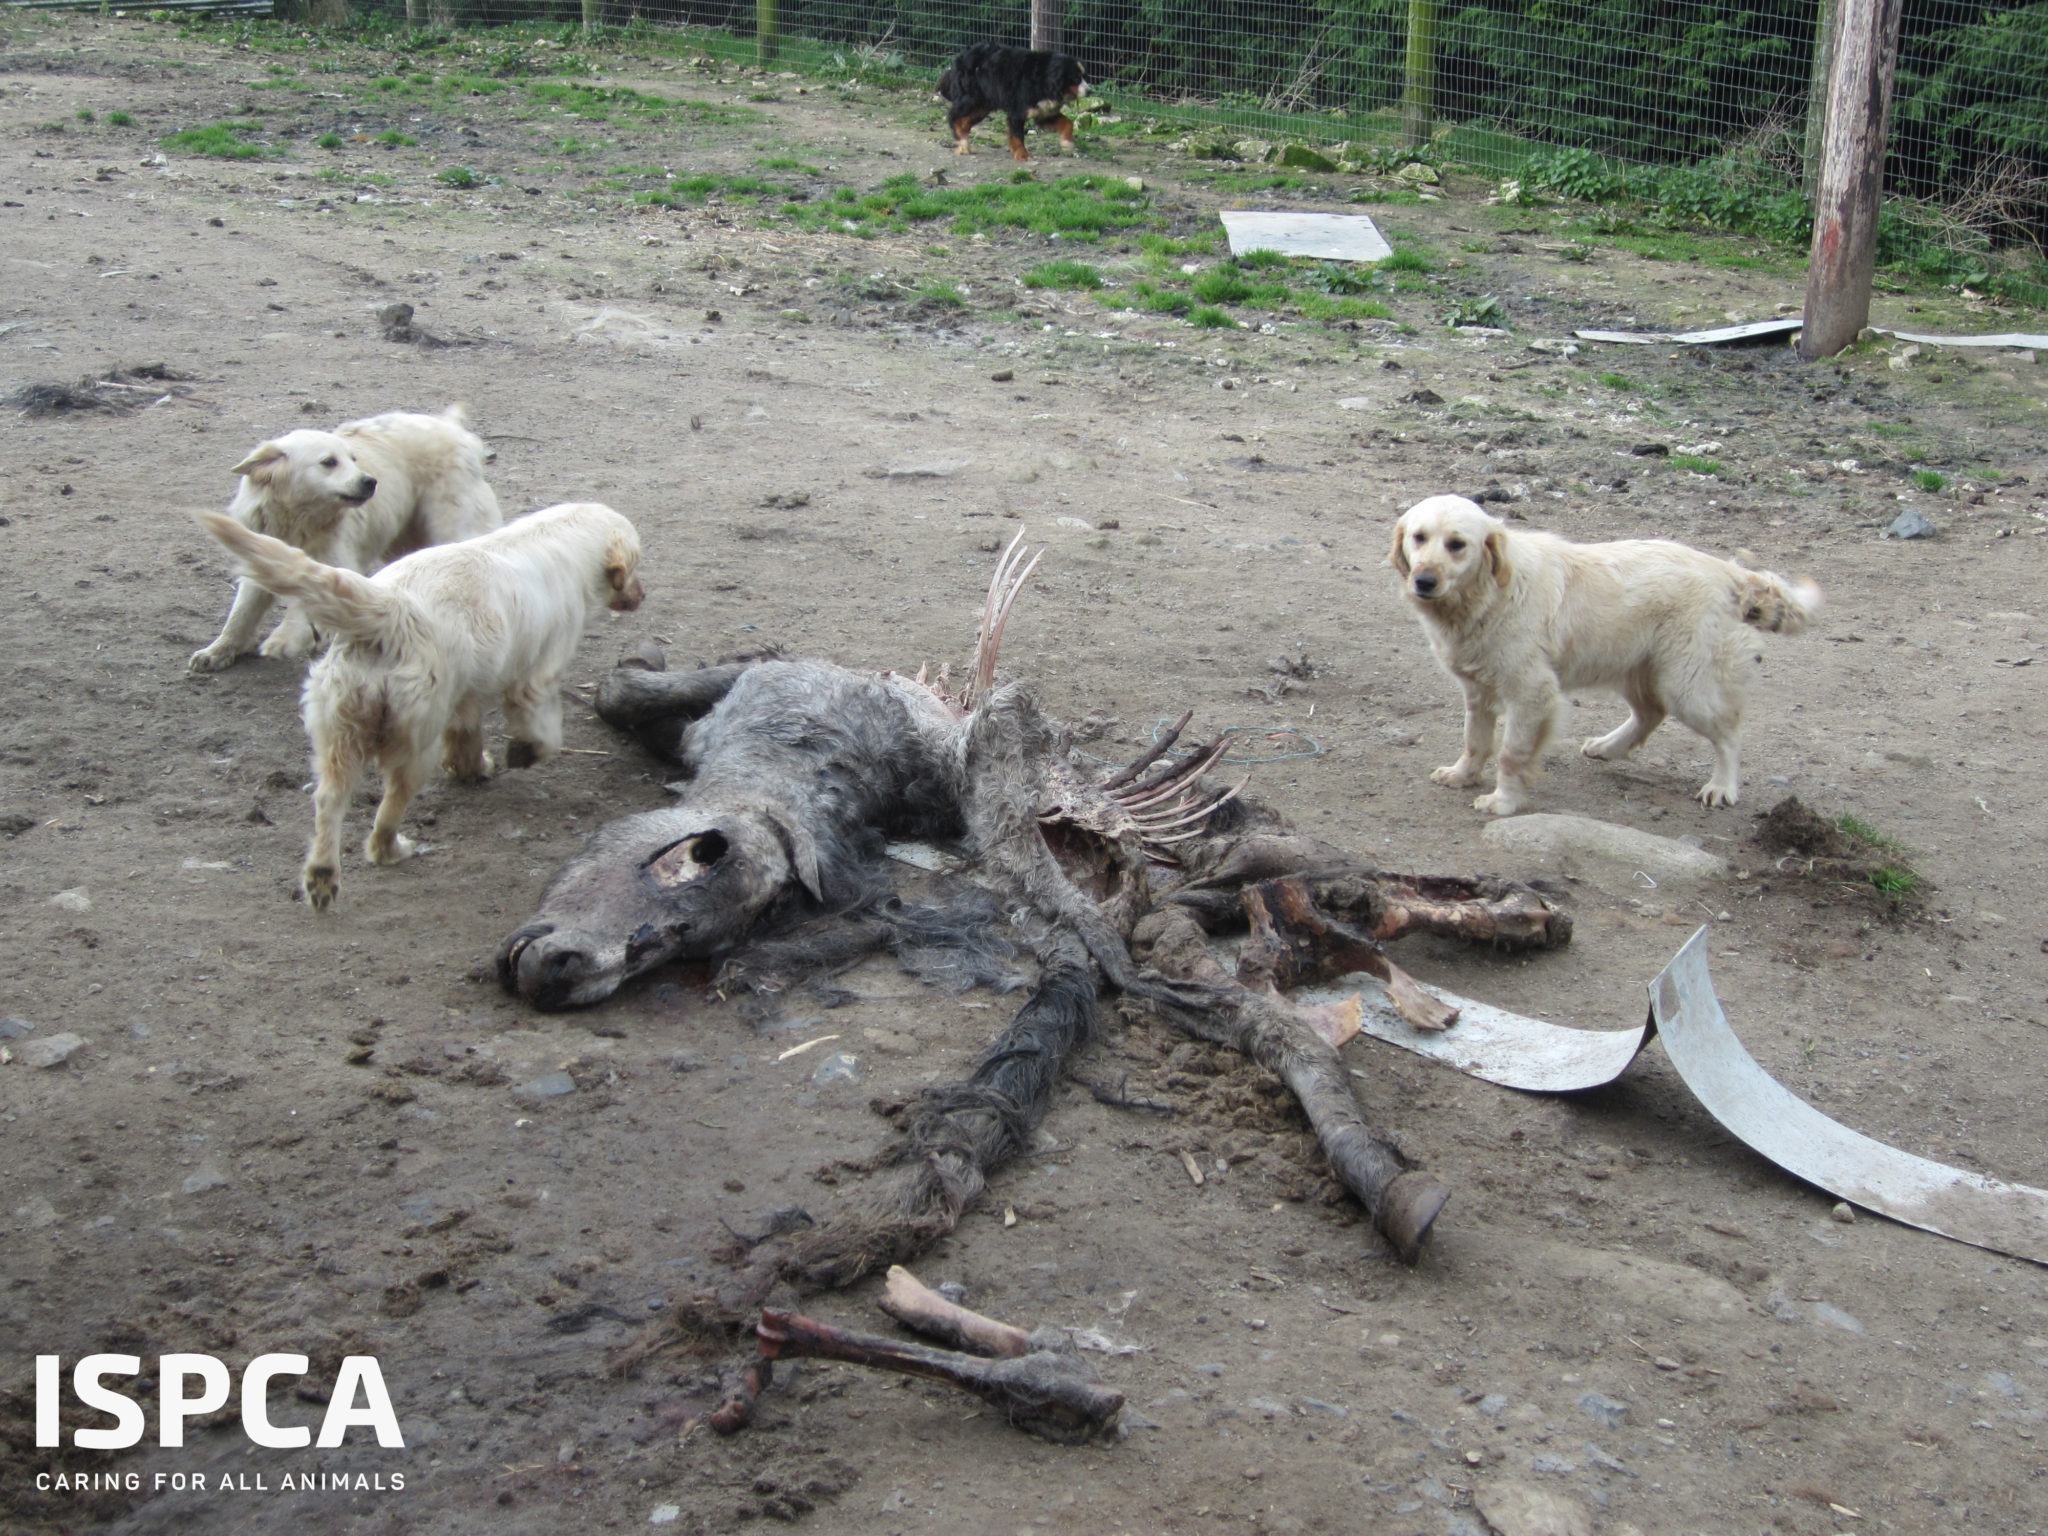 ISPCA animal cruelty